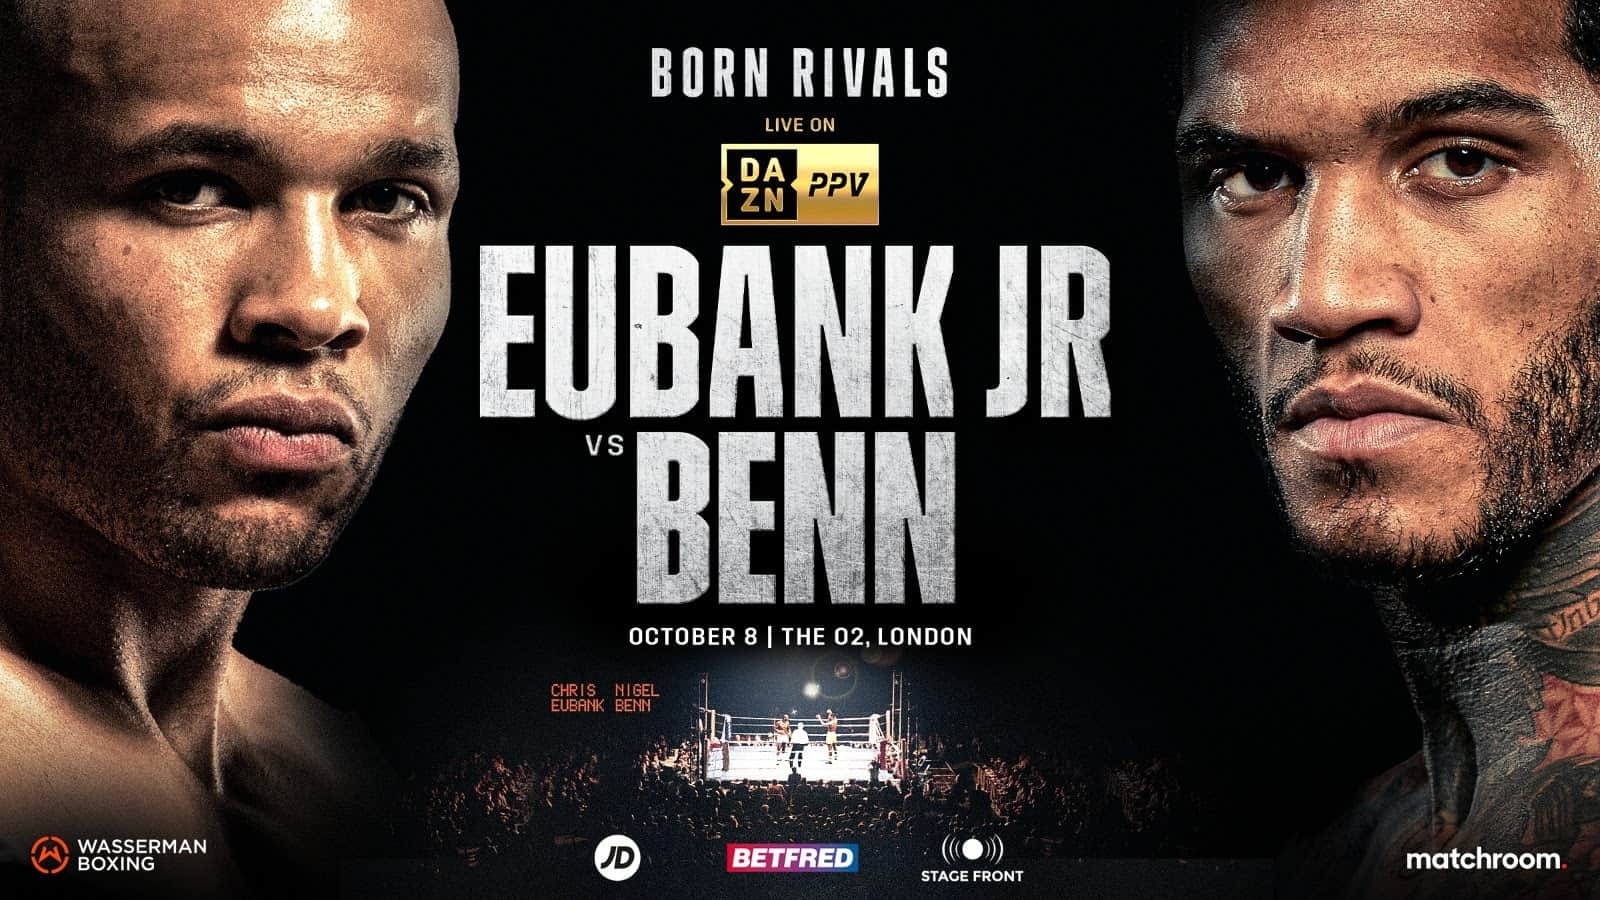 Eubank Jr vs Benn UK rivals collide at catchweight on DAZN PPV